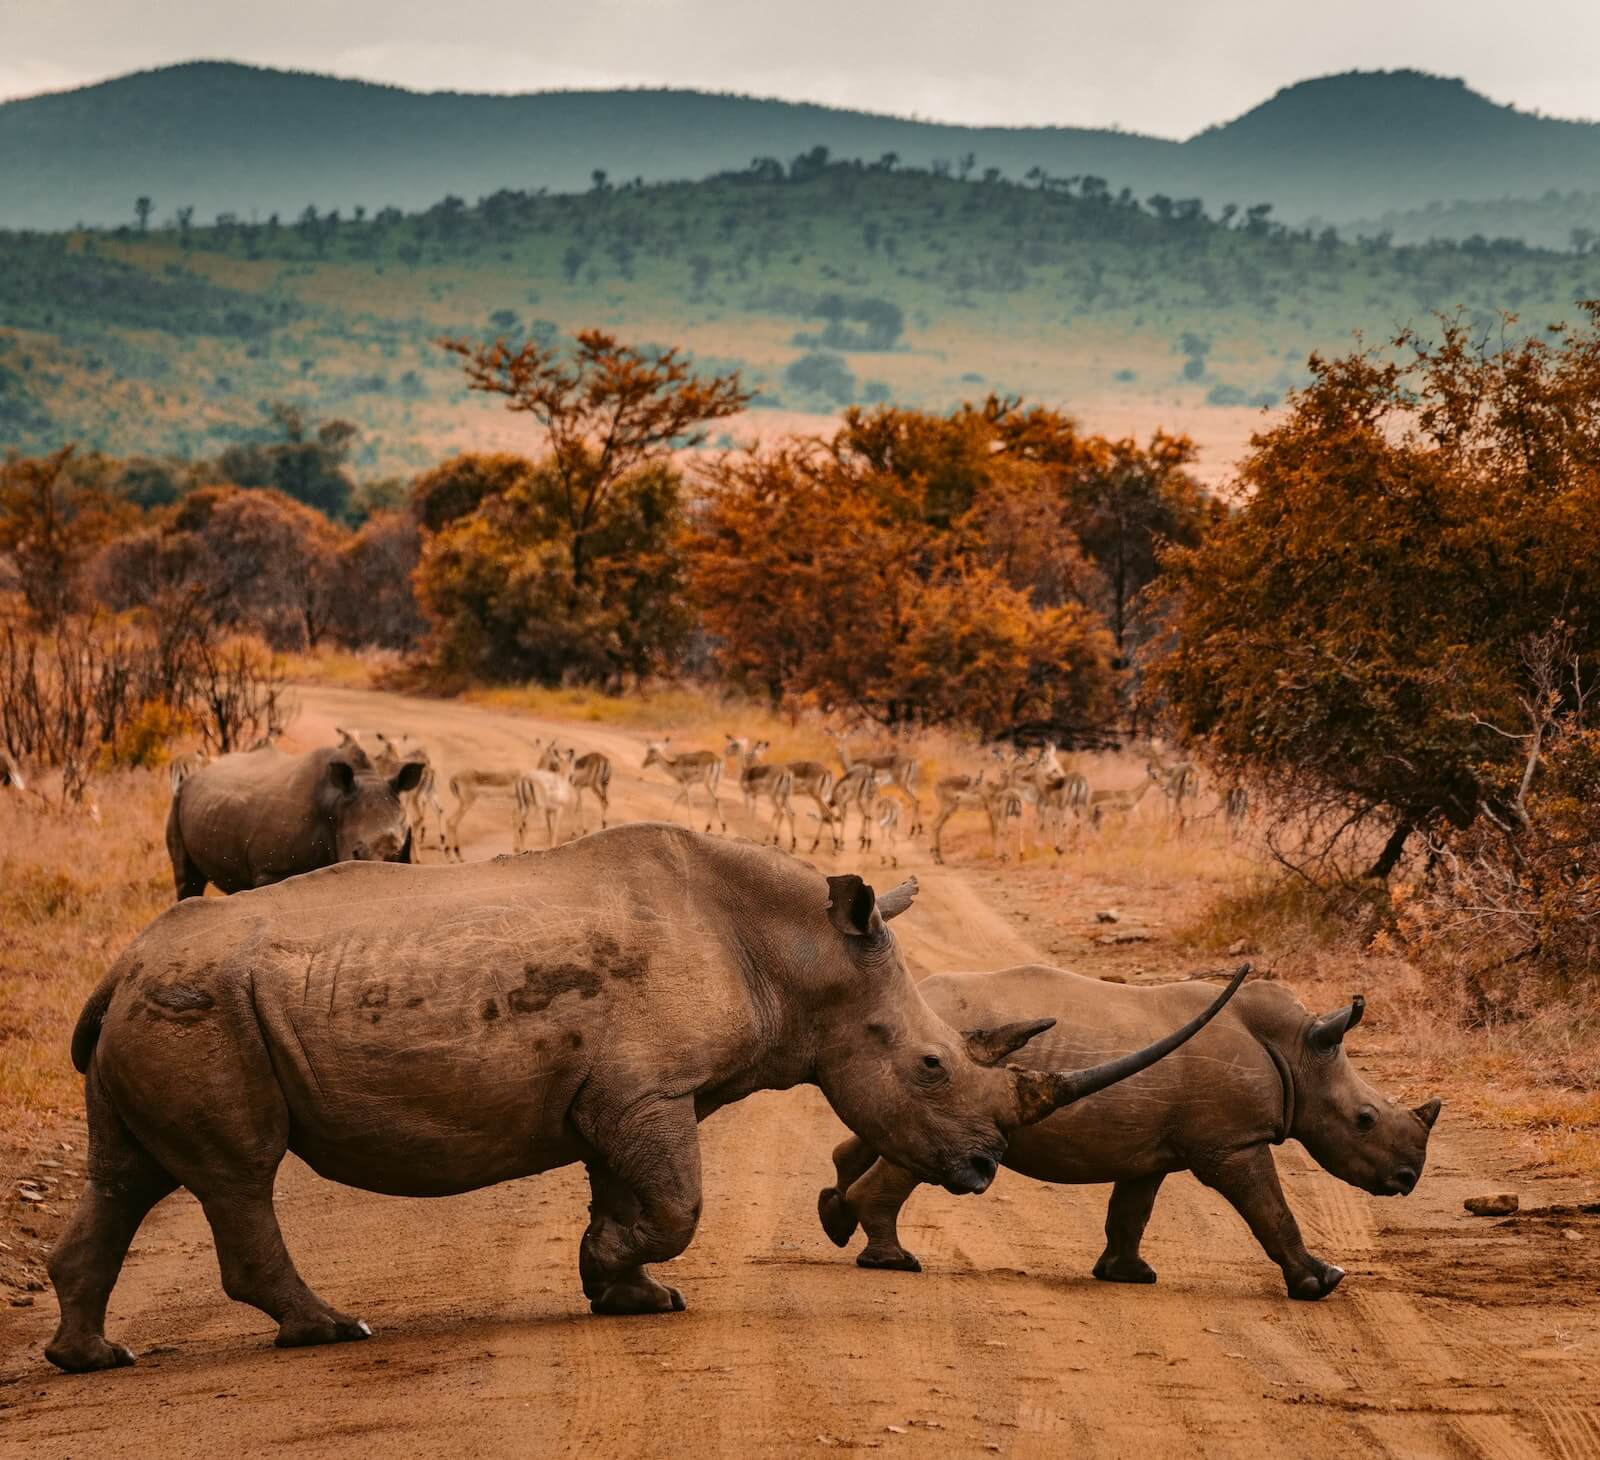 Rhinos in South Africa walking across the dirt road